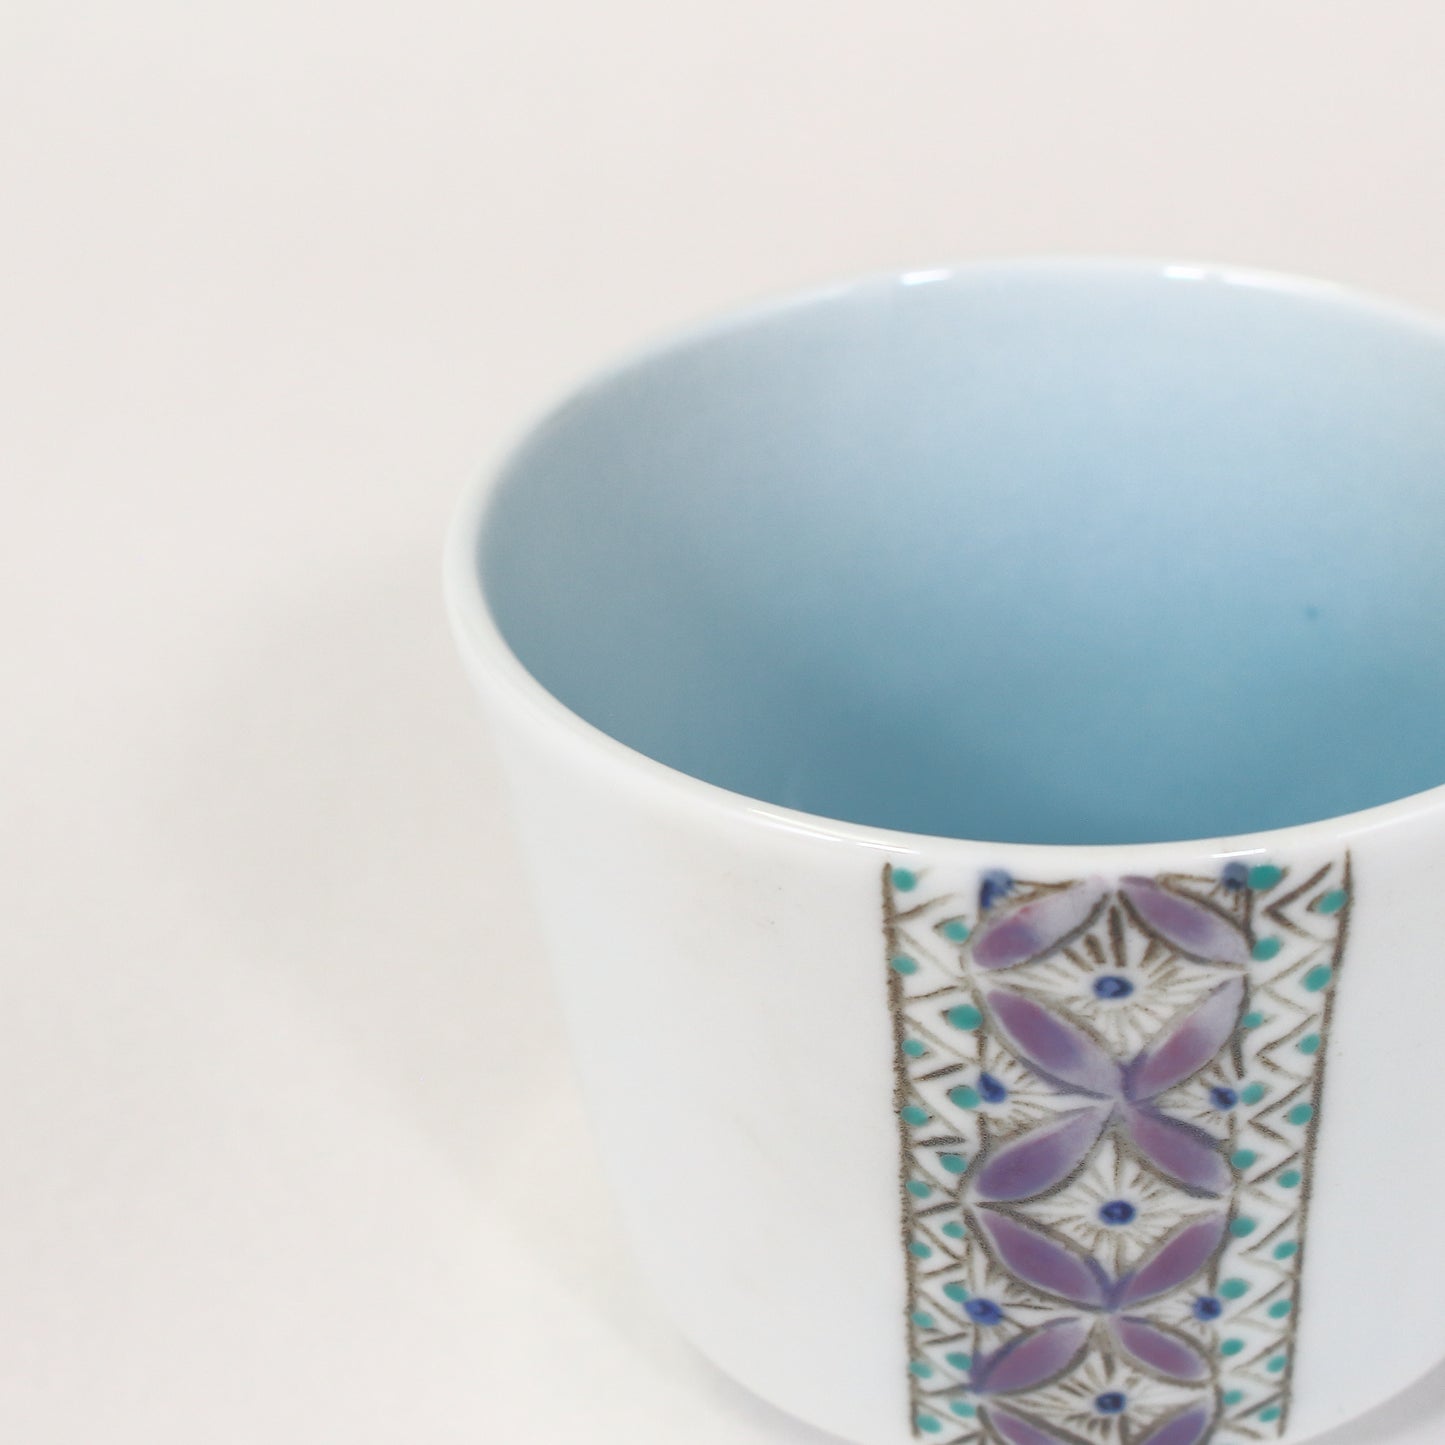 Arita ware | Takuma Tsuji | “Belted” -cup- [one-of-a-kind item]